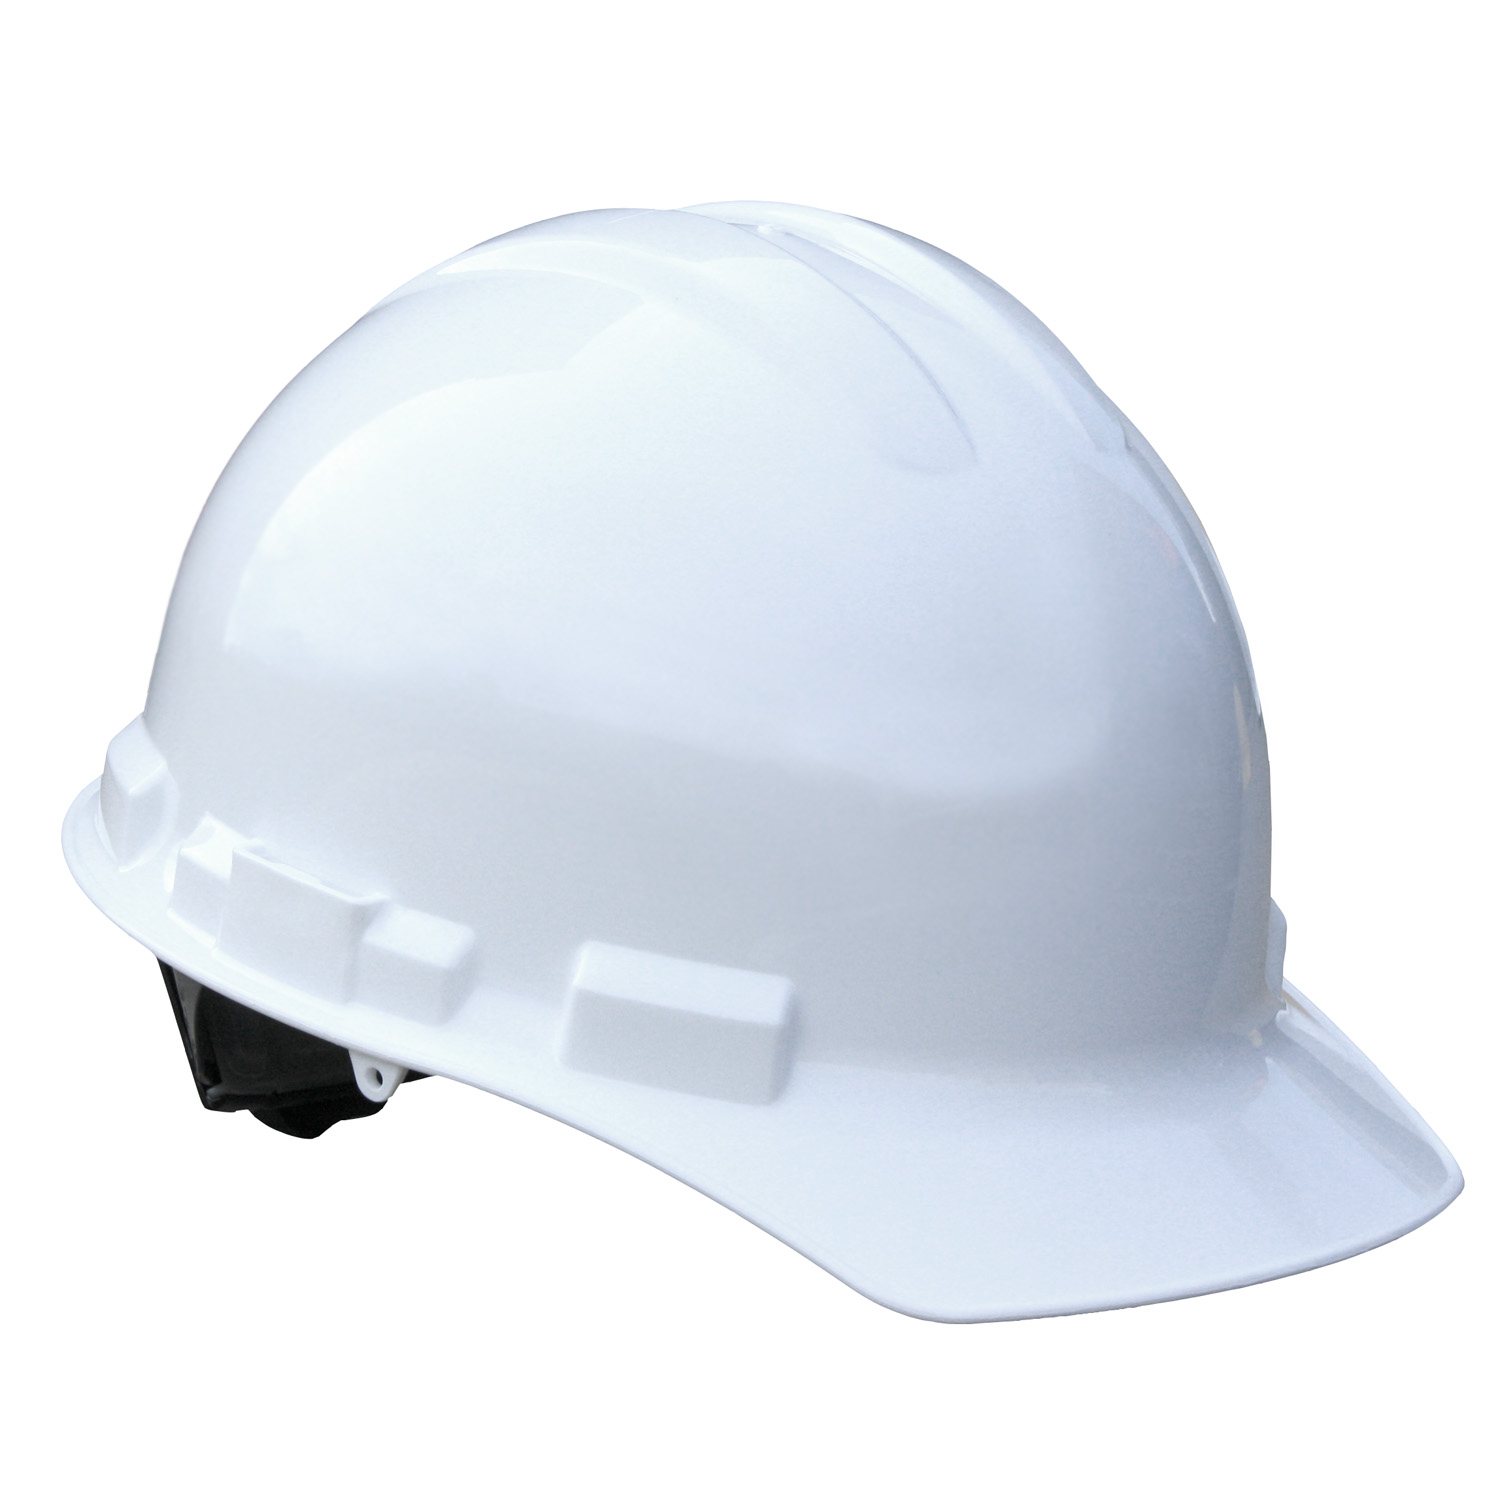 Granite™ Cap Style 4 Point Pinlock Hard Hat - White